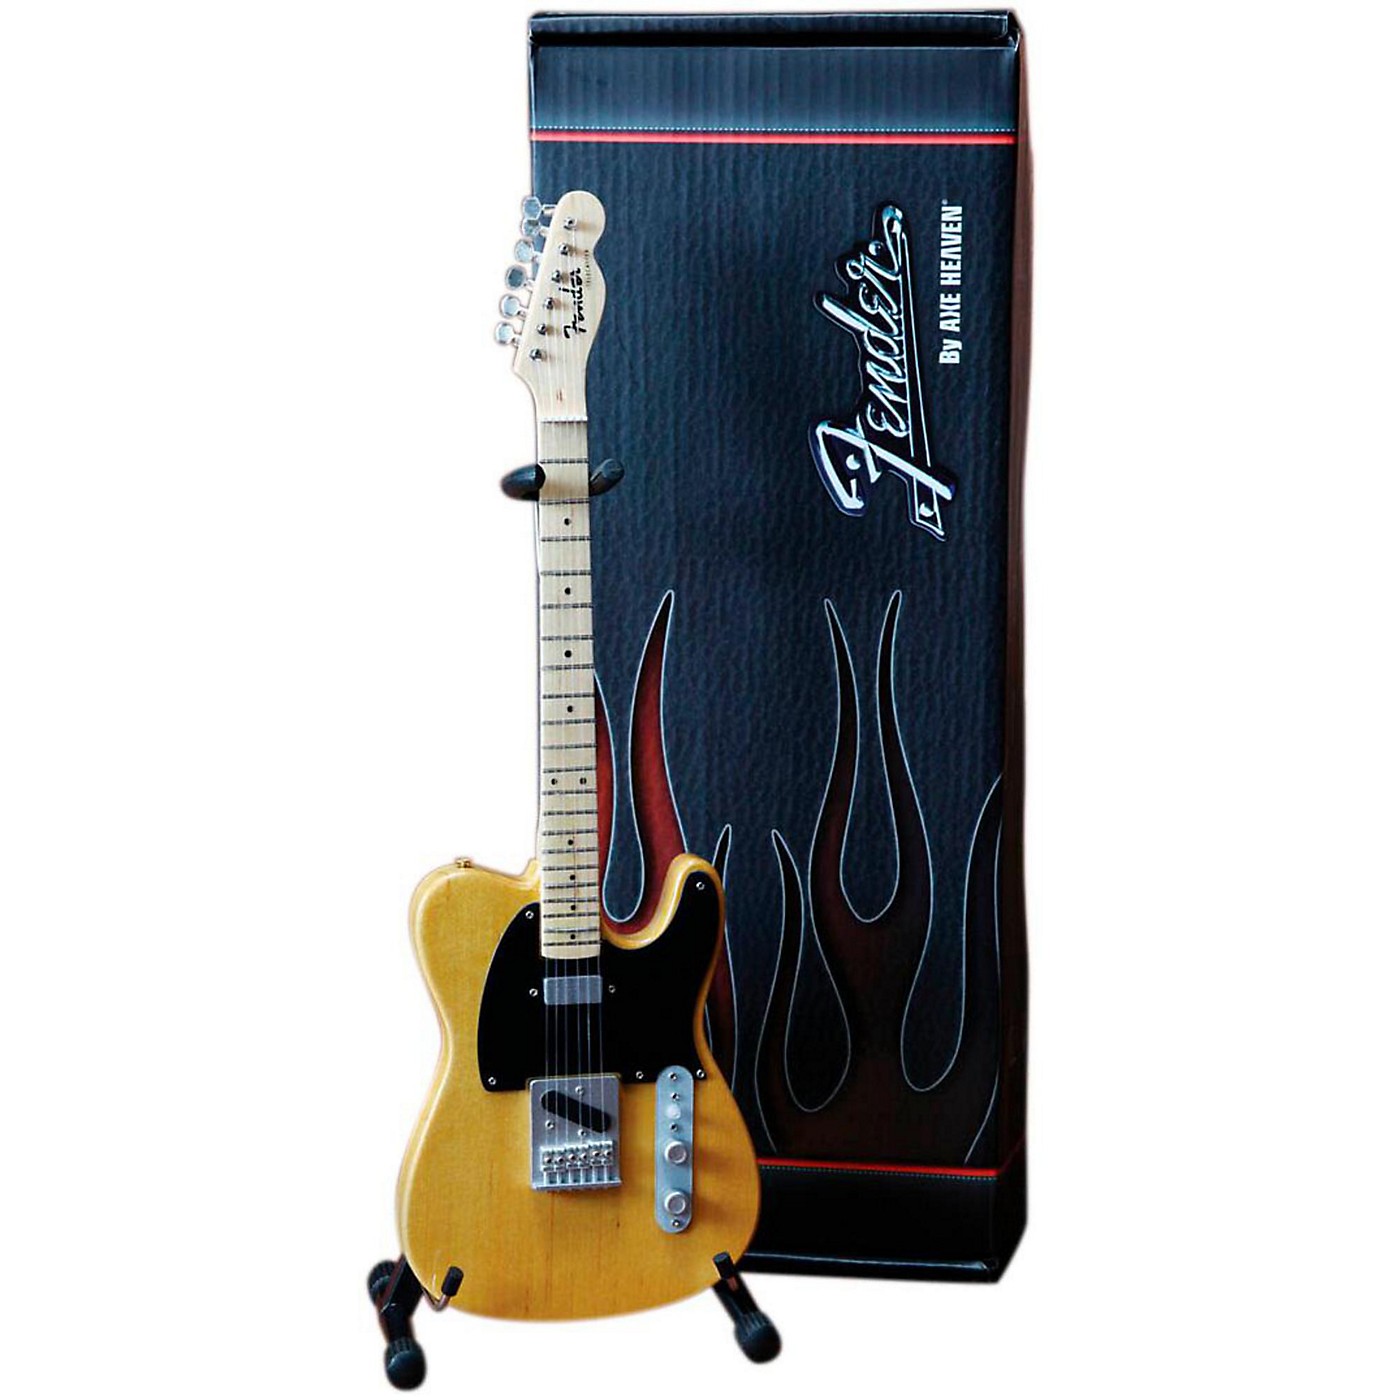 Axe Heaven Fender Telecaster Butterscotch Blonde Miniature Guitar Replica Collectible thumbnail